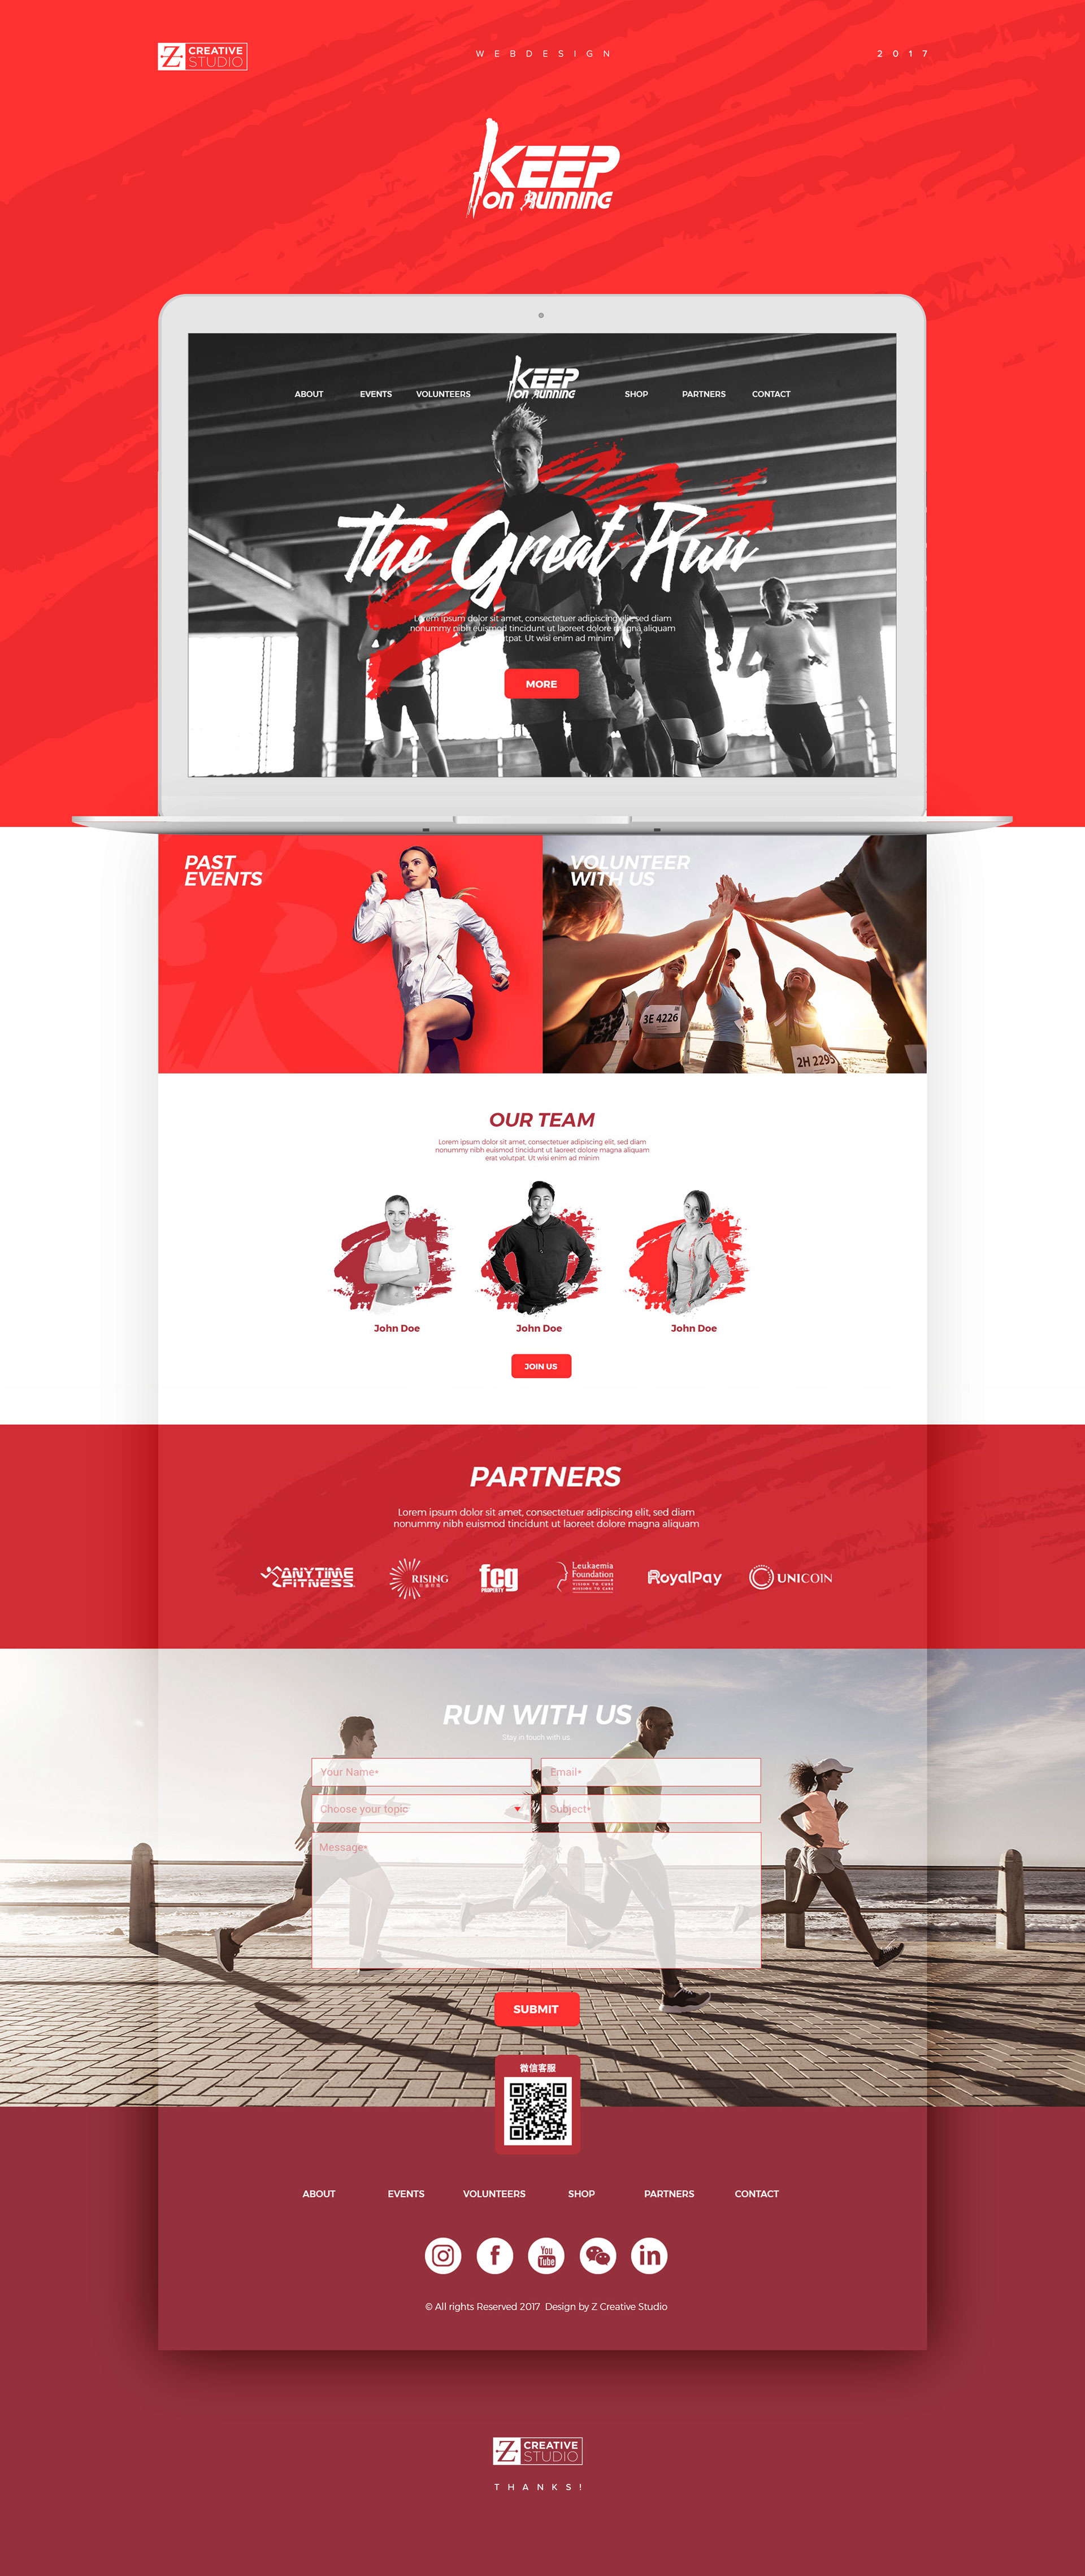 Keep on Running Club web design by Z Creative Studio Branding & Graphic Design Melbourne